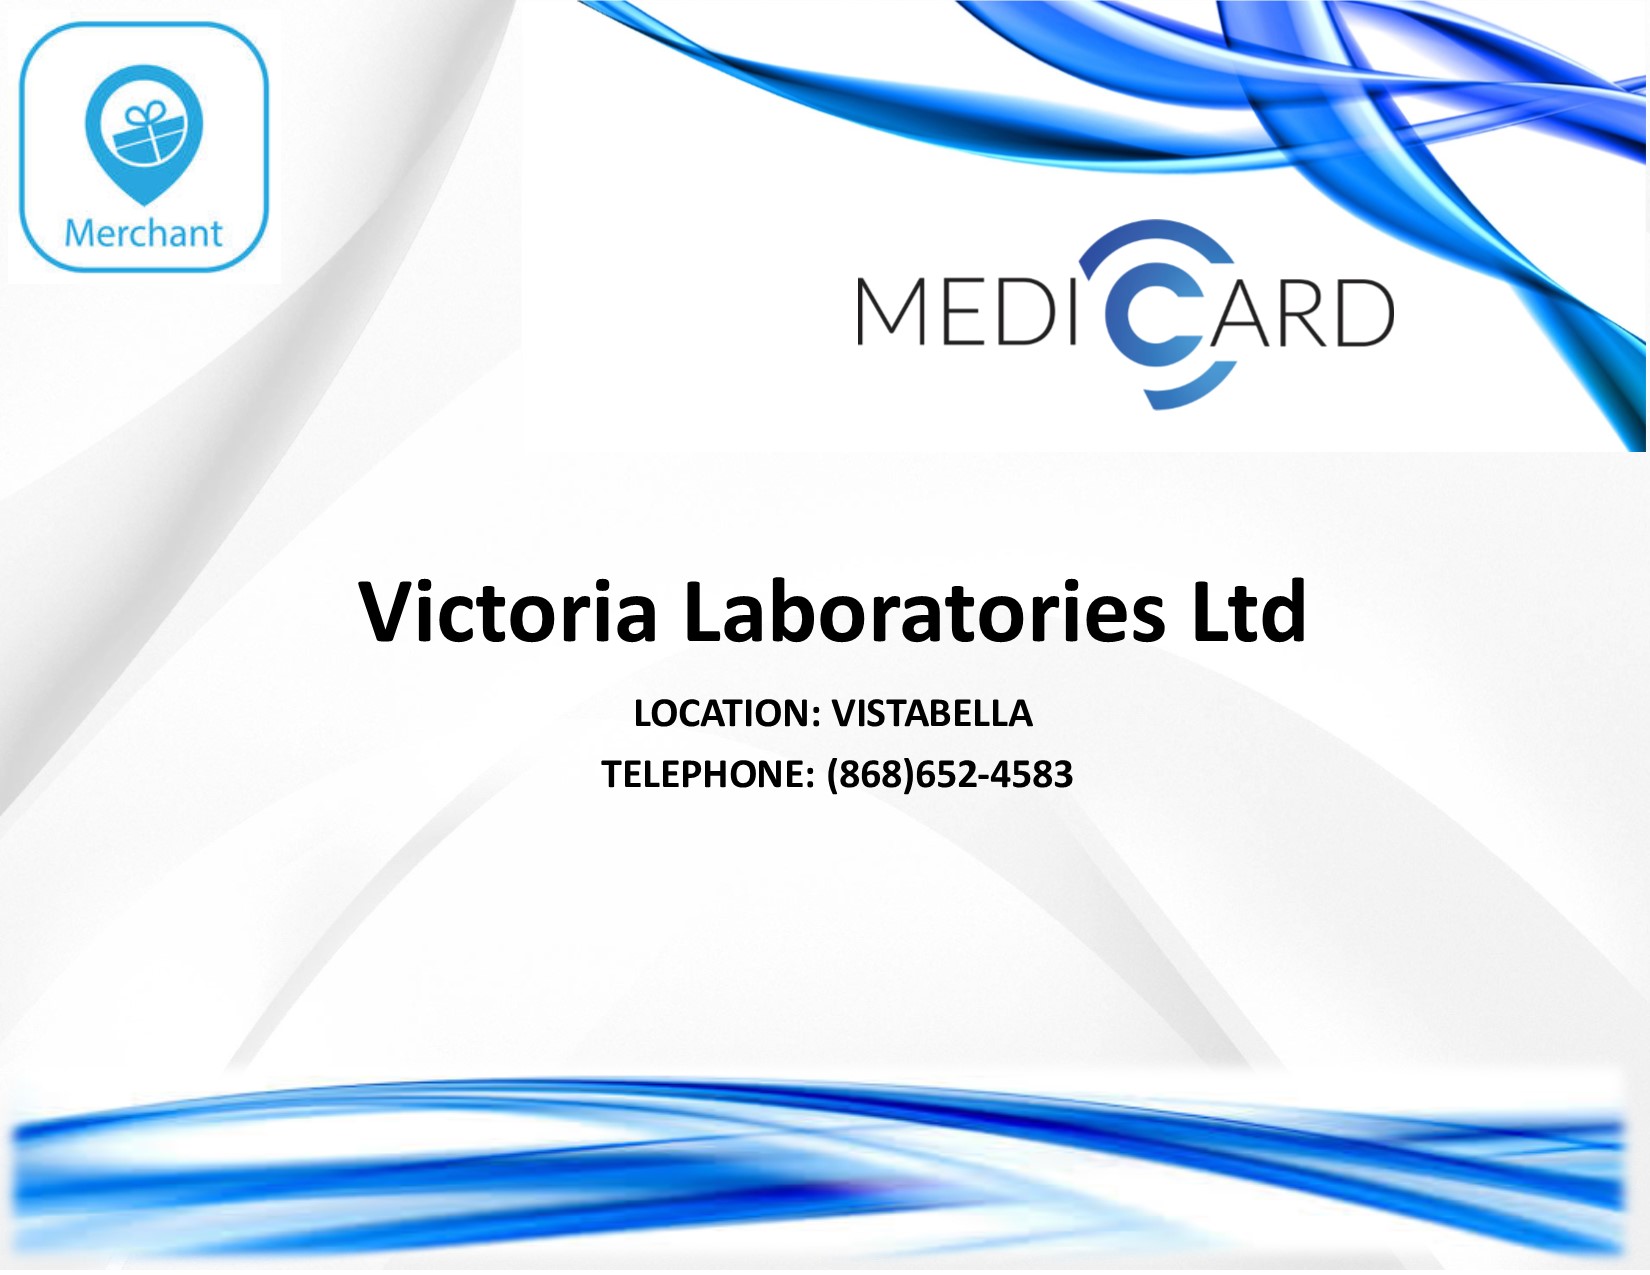 Victoria Laboratories Limited